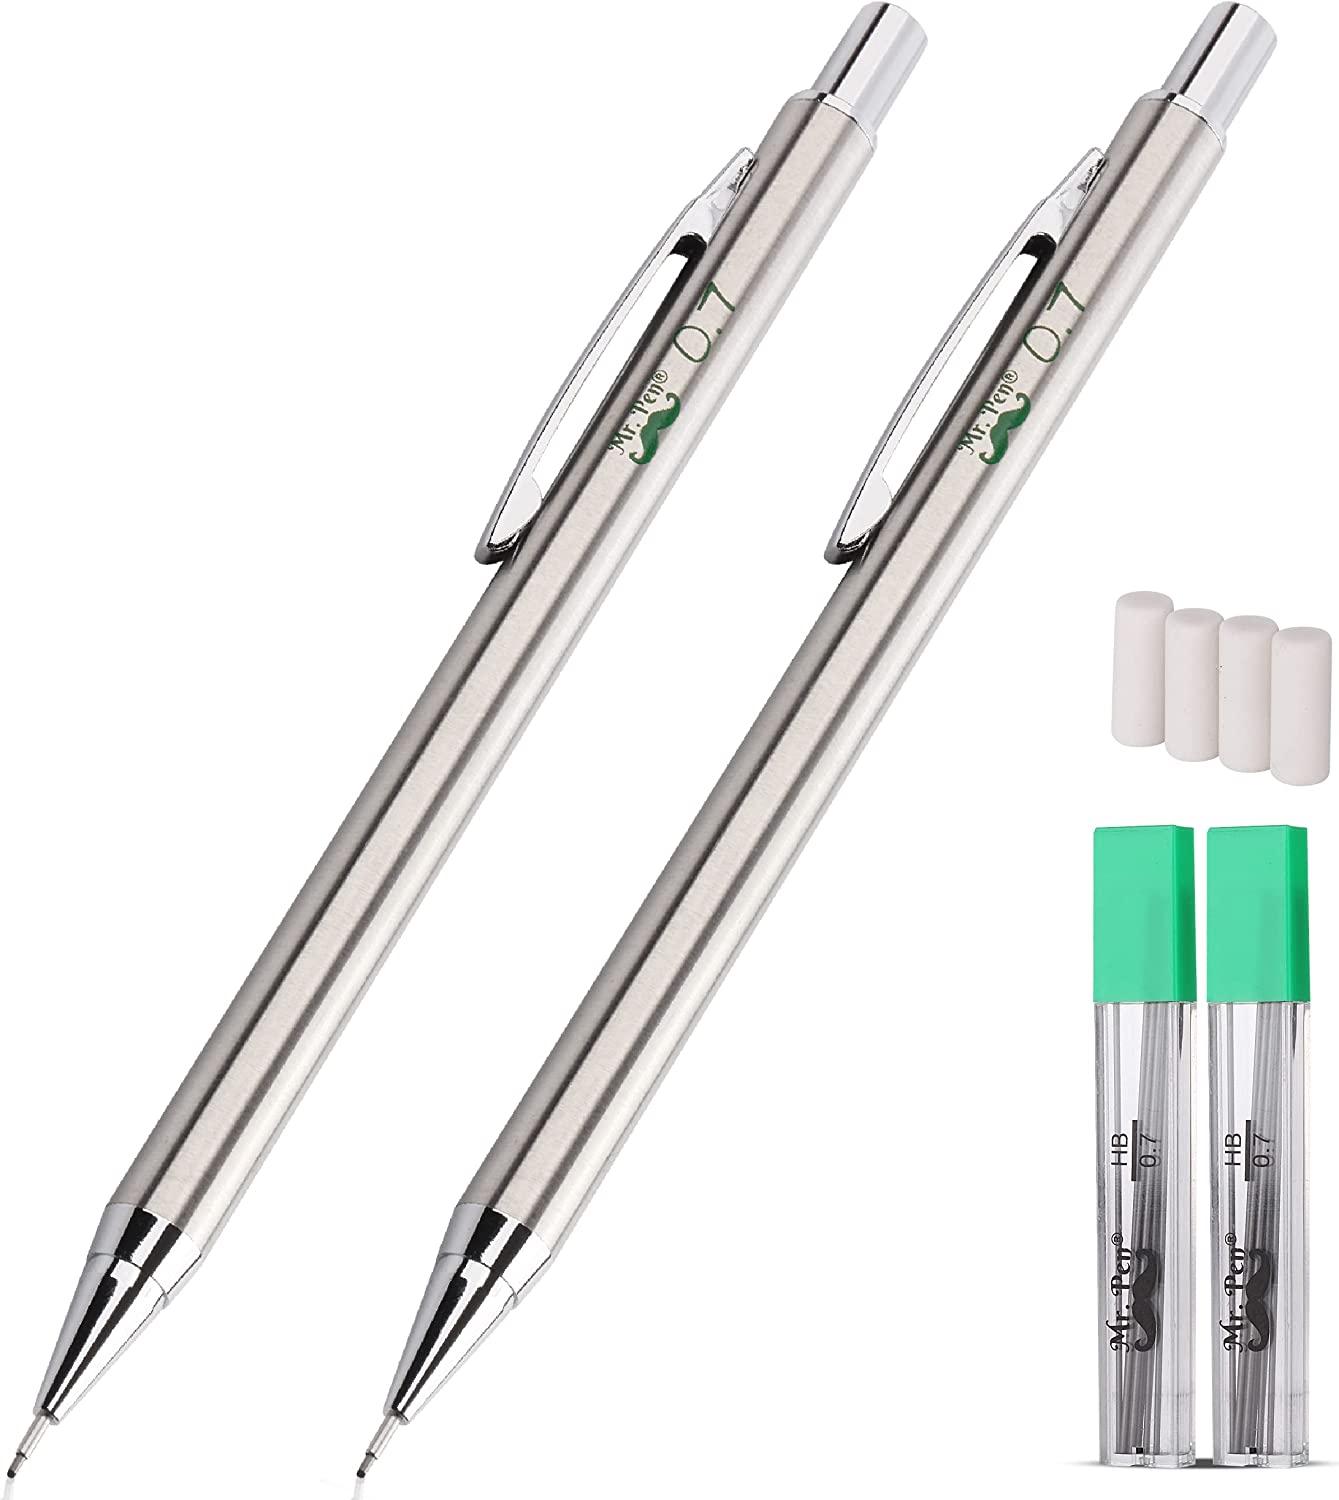 Mr. Pen- Mechanical Pencils 0.7, Pack of 2, Metal Mechanical